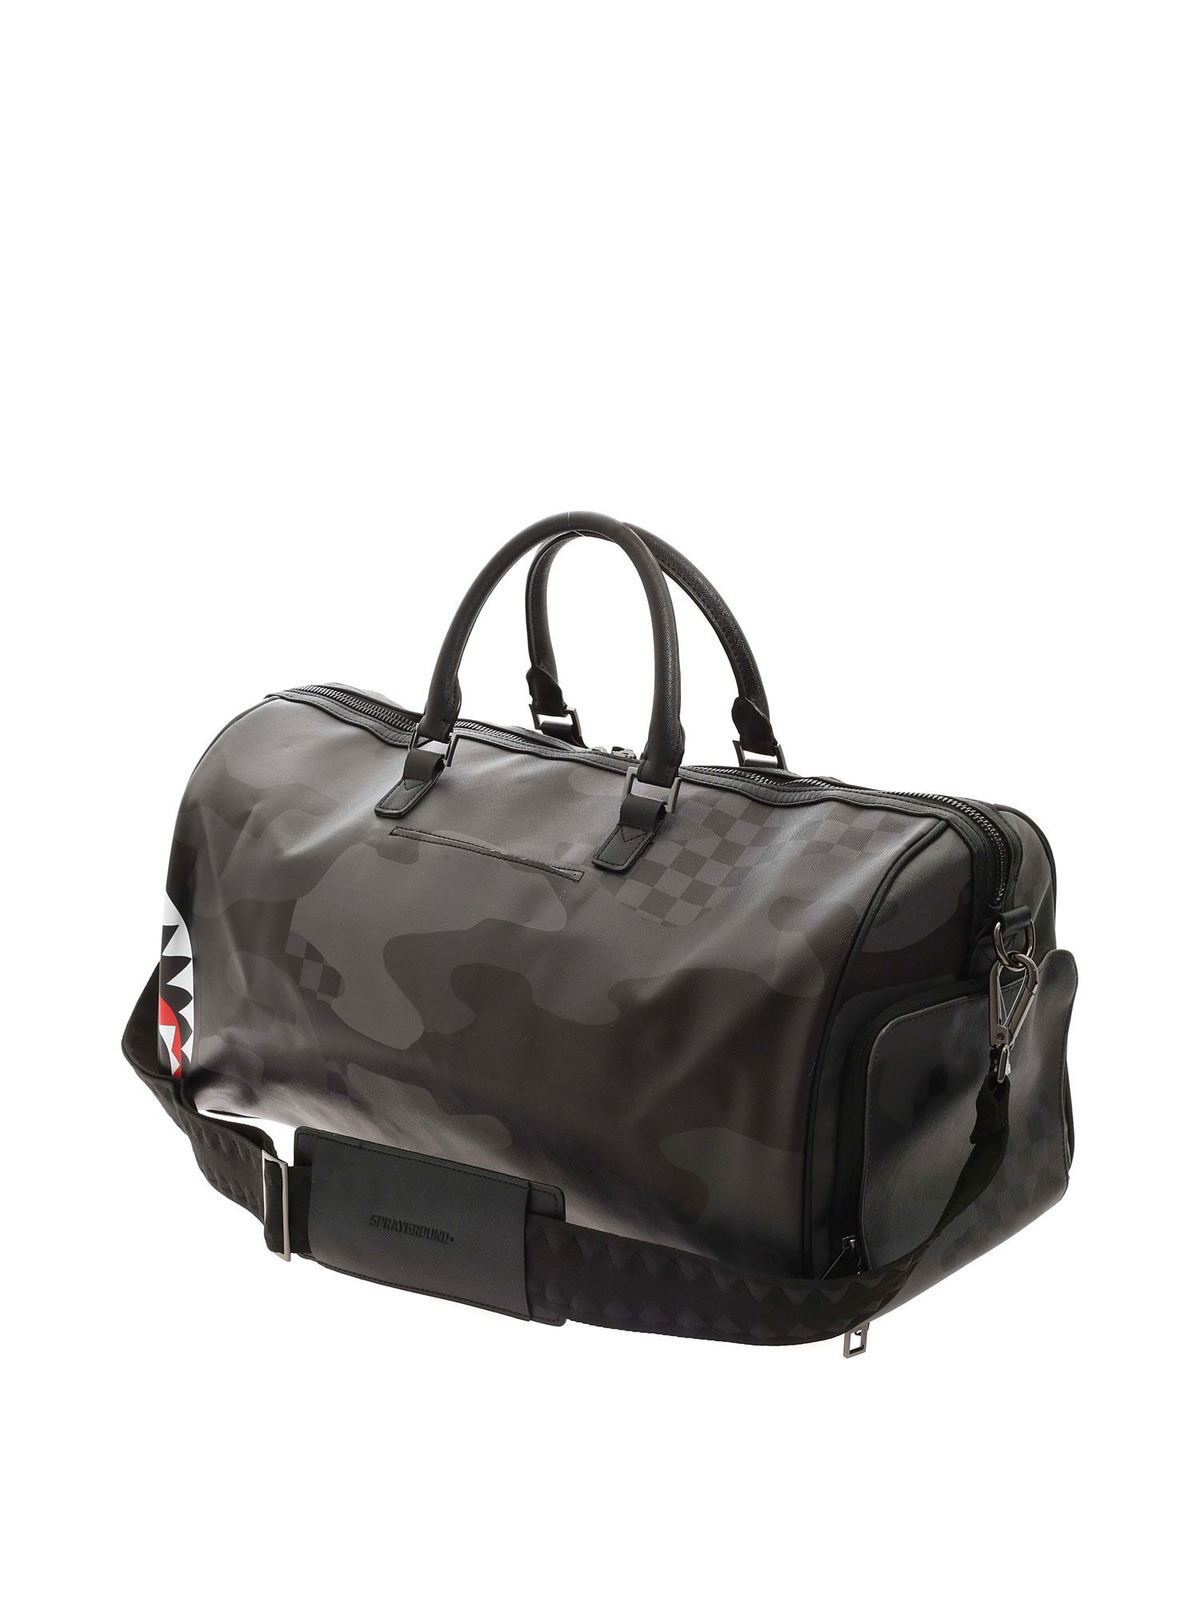 Sprayground, Bags, Limited Edition Sprayground Duffle Bag